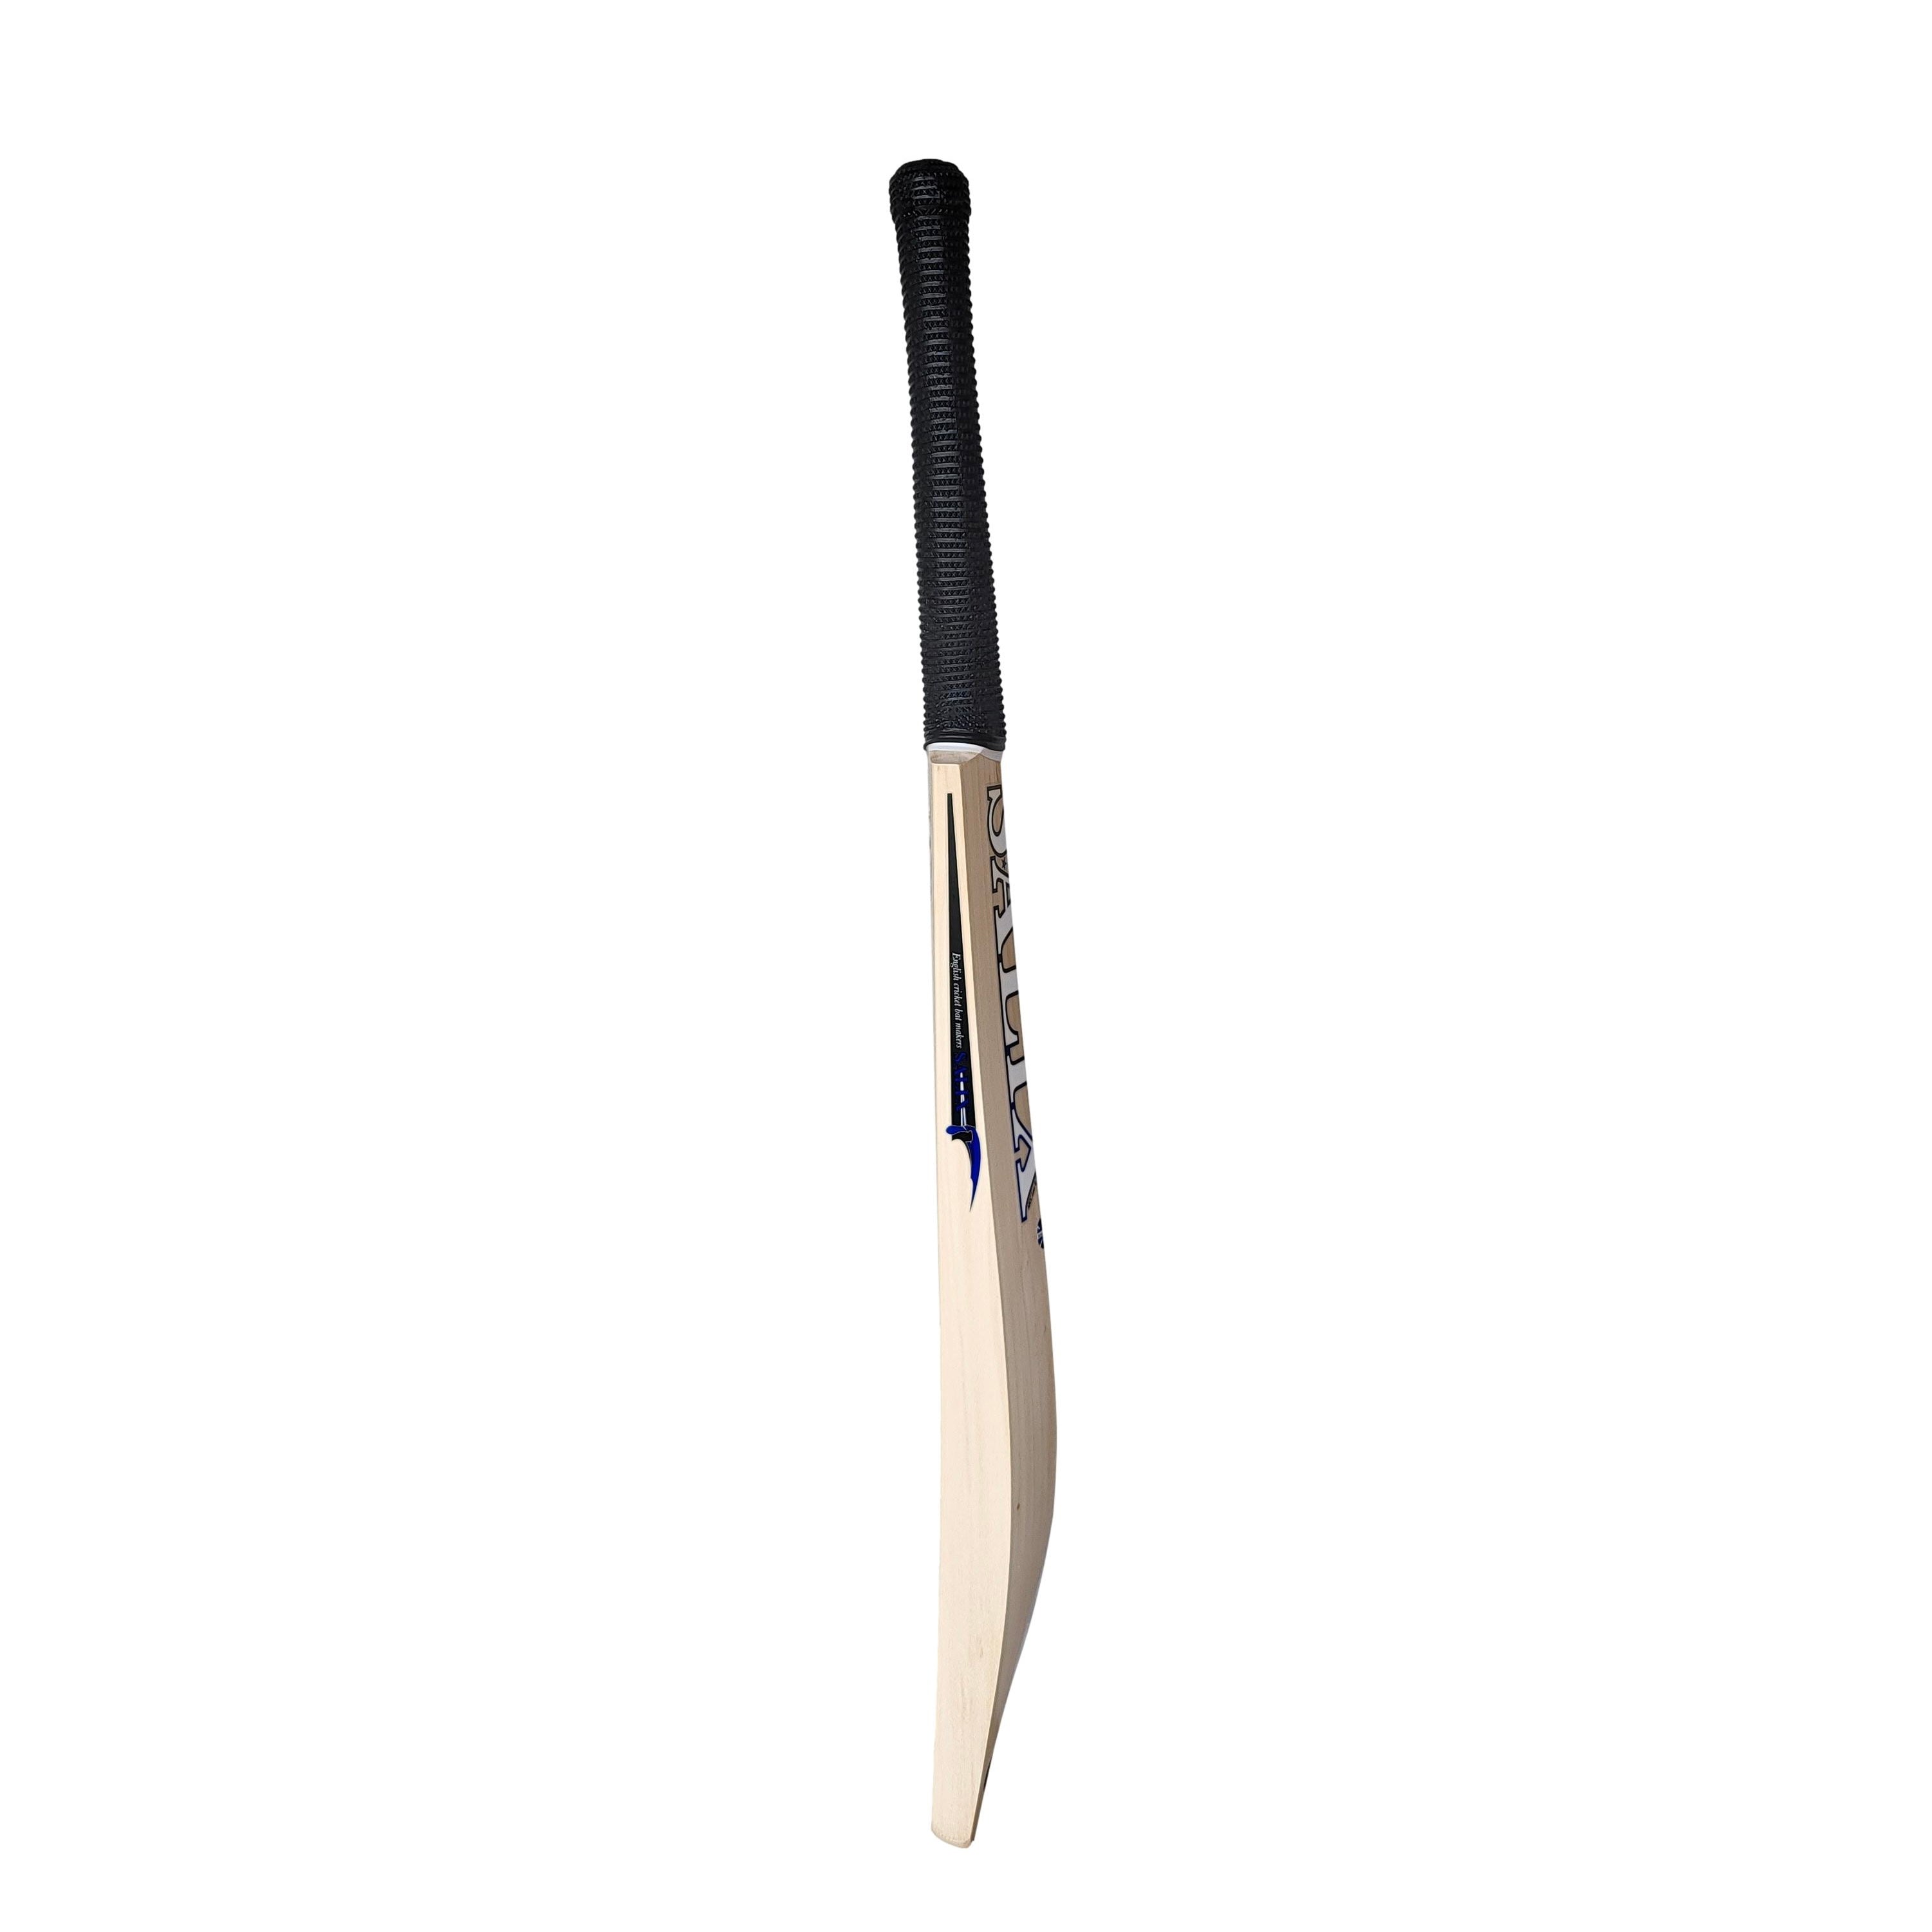 Salix AMP Performance Cricket Bat - The Cricket Store